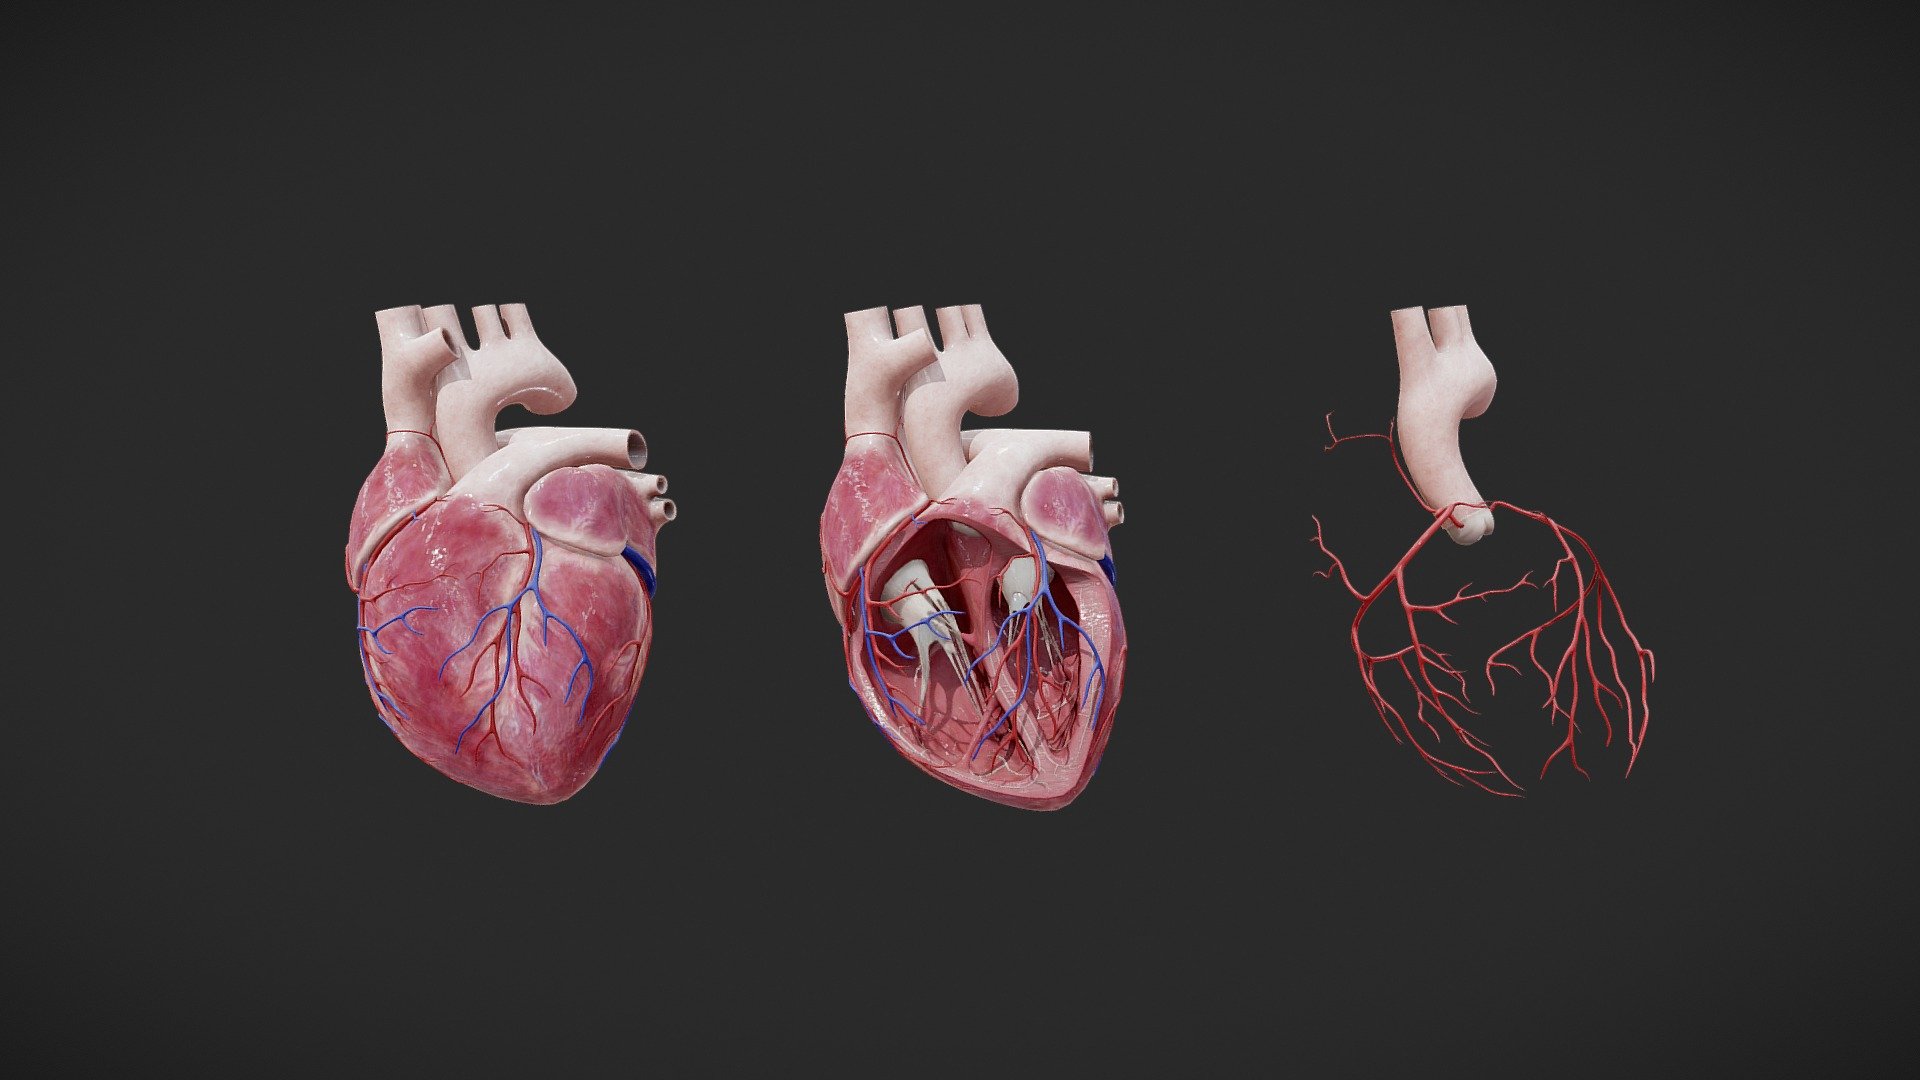 heart anatomy

VR/Game Ready - Heart Anatomy - Buy Royalty Free 3D model by haokai (@haokaiqoo) 3d model